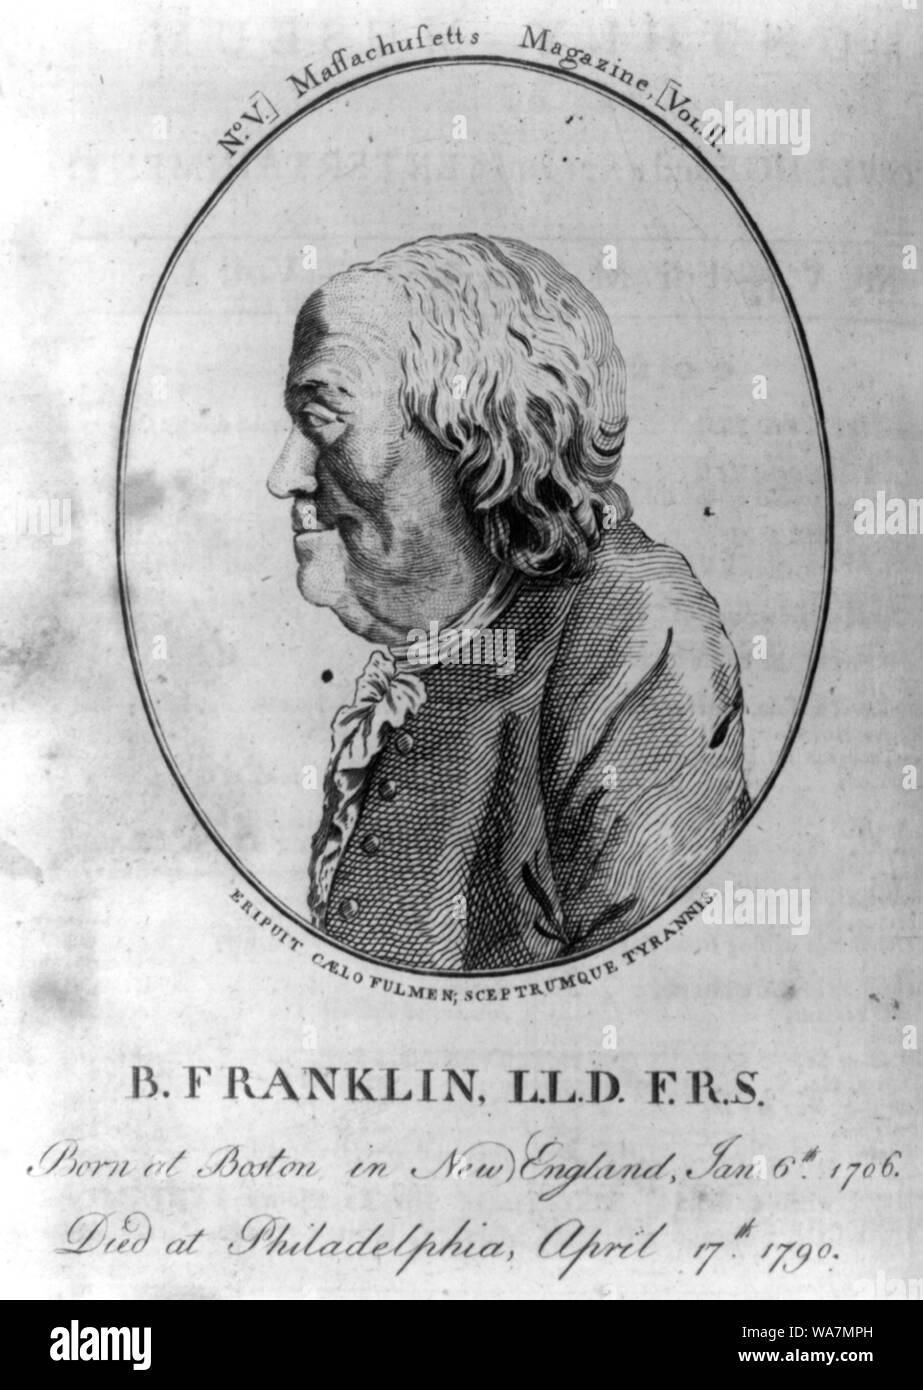 B. Franklin, L.L.D. F.R.S. - born at Boston in New England, Jan. 6th 1706 - died at Philadelphia, April 17th 1790 Stock Photo